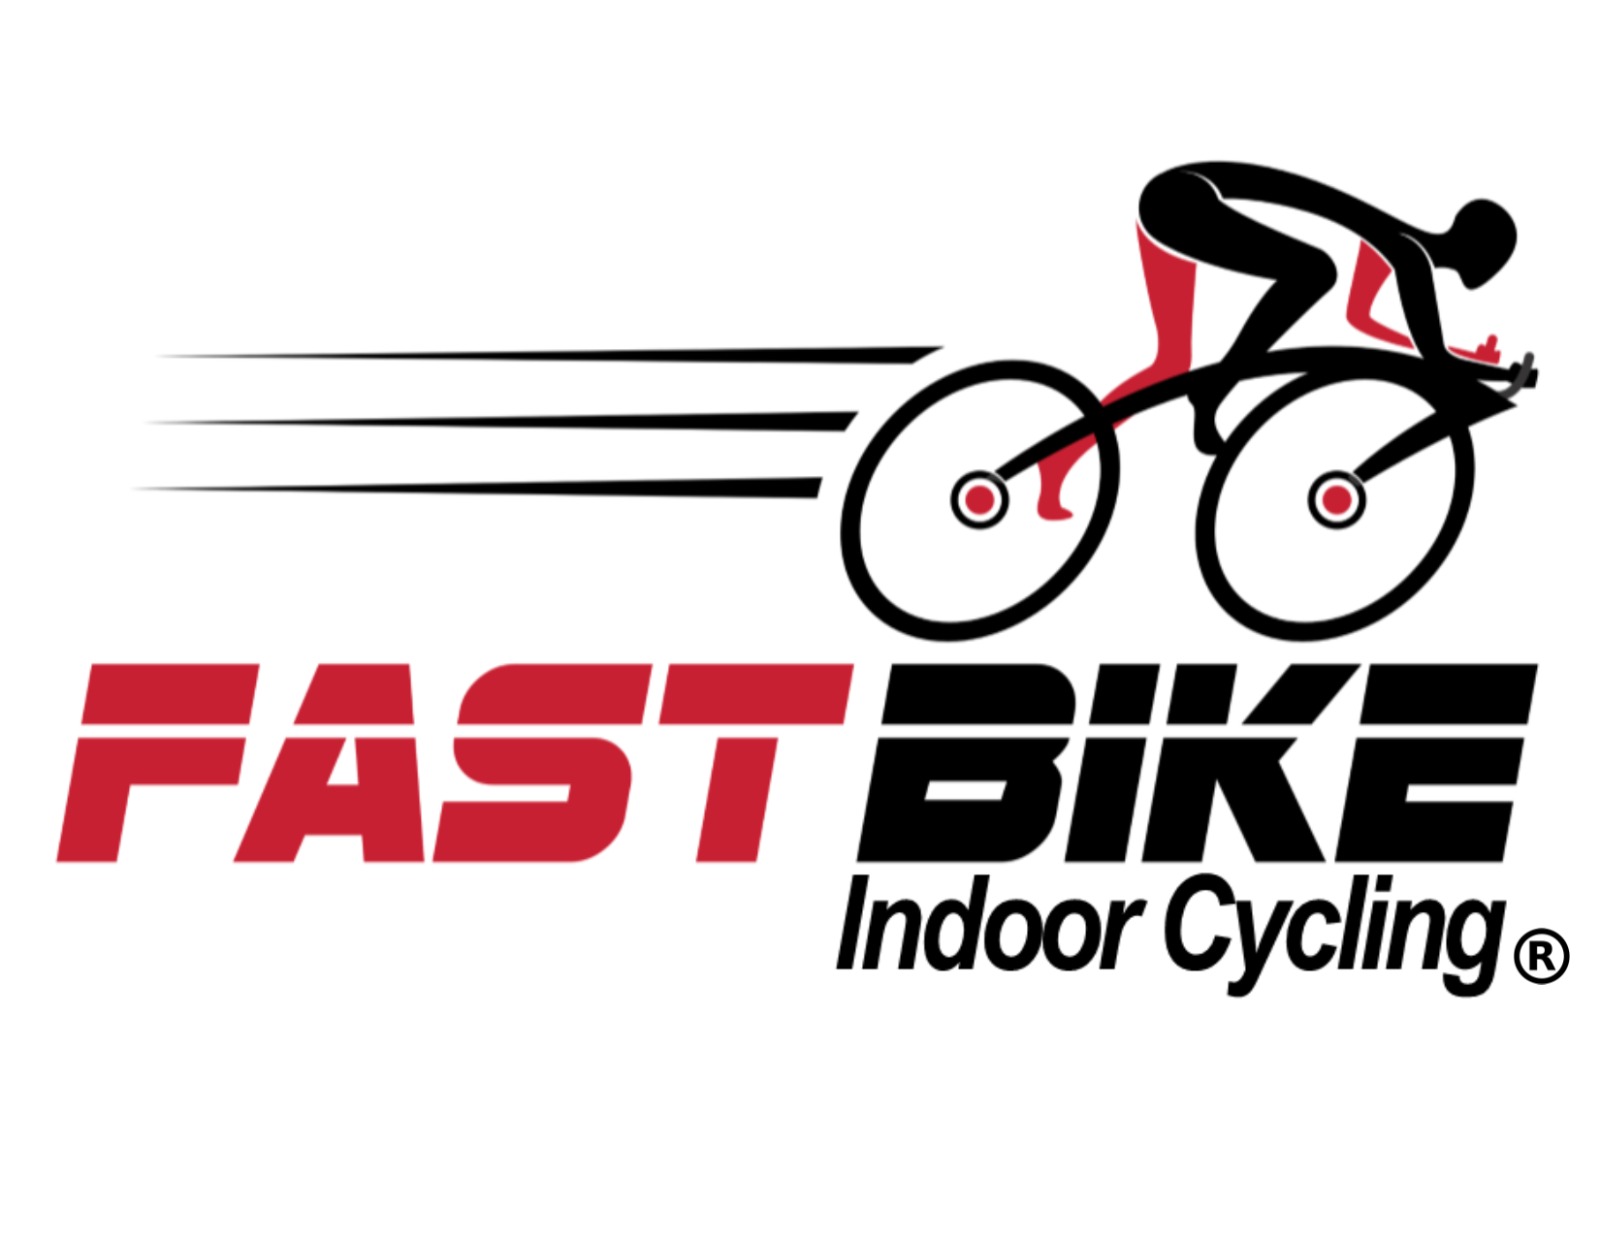 Fastbike Indoor Cycling logo